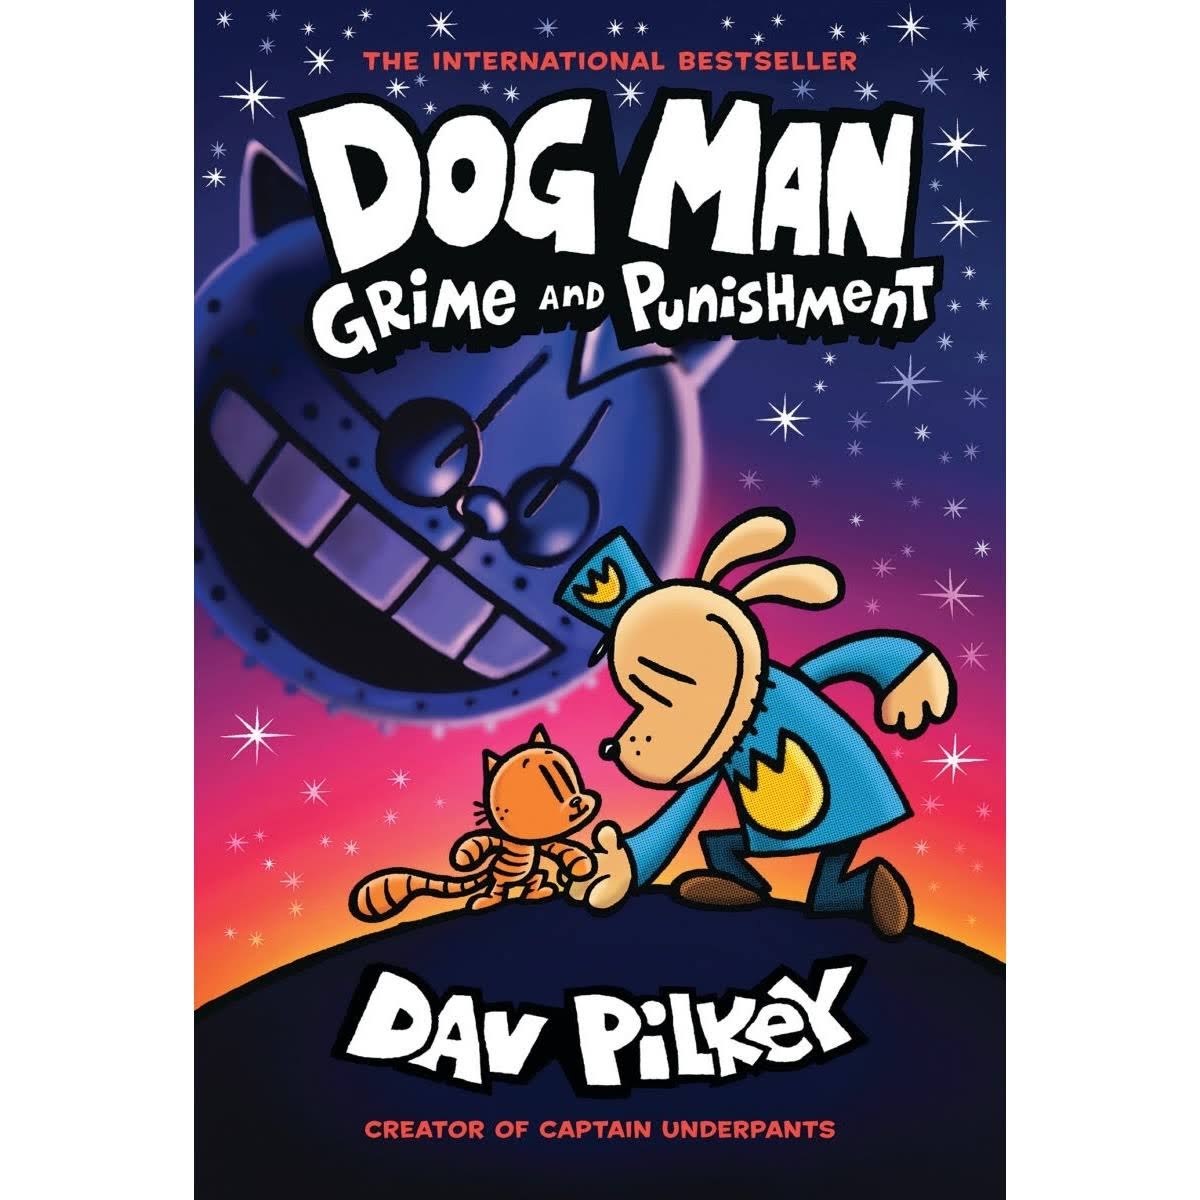 Dog Man 9 - Grime and Punishment